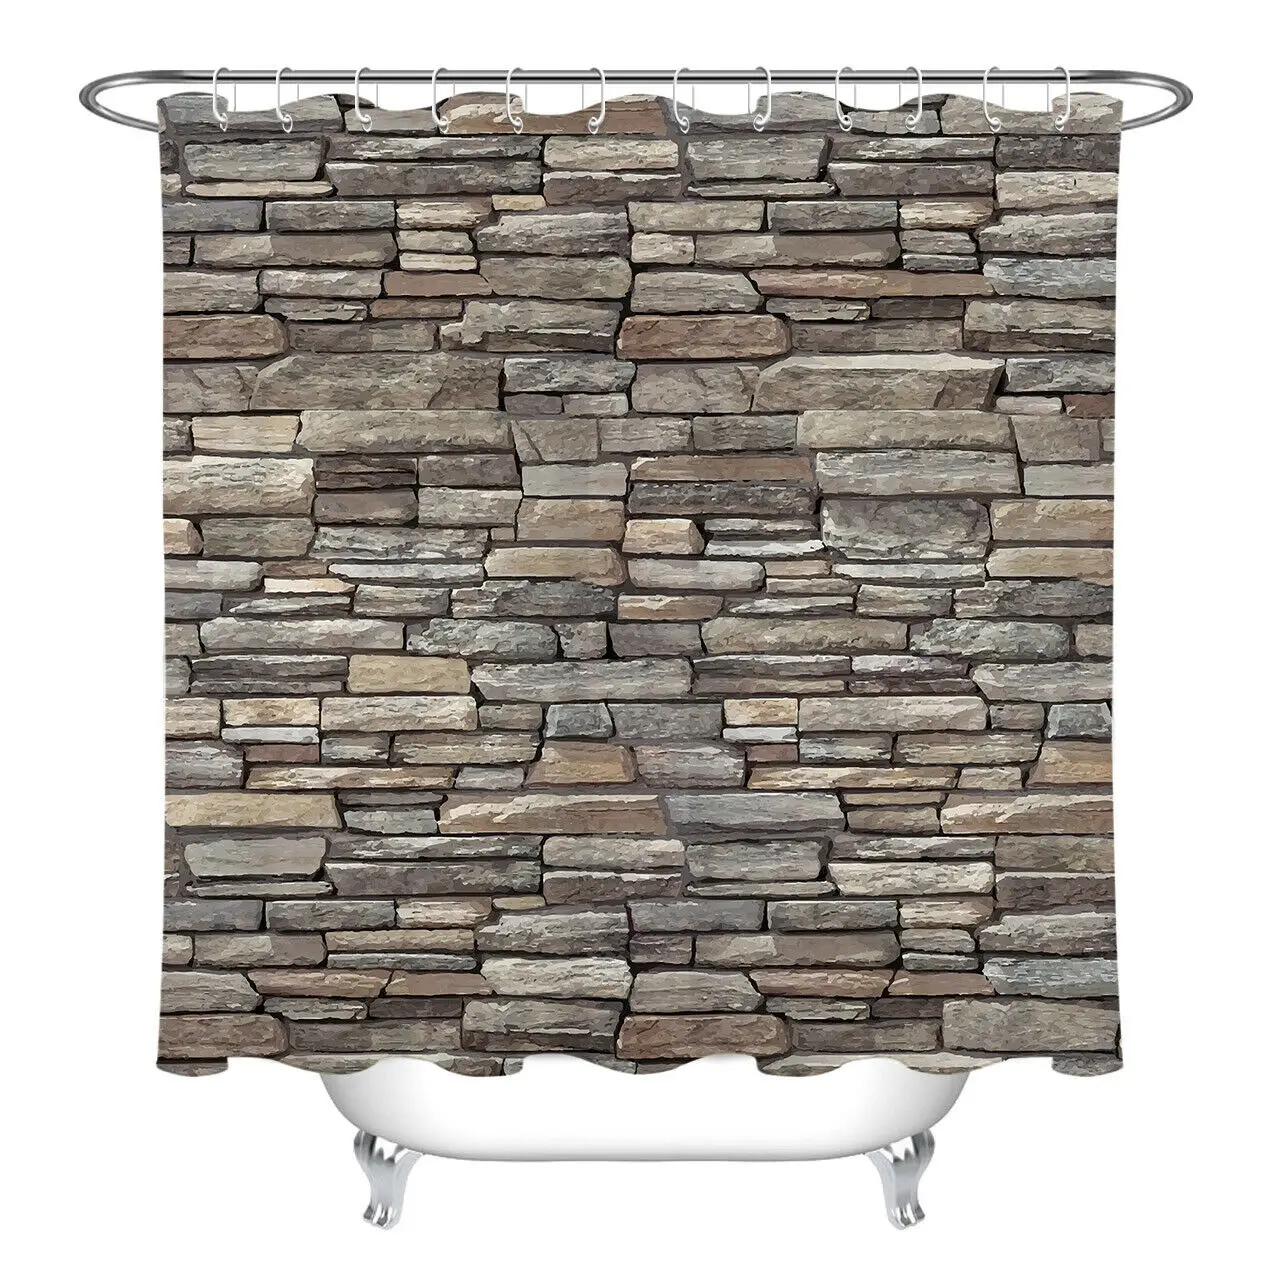 Shabby Grunge Rustic Stone Wall Waterproof Fabric Shower Curtain Bathroom Hooks 